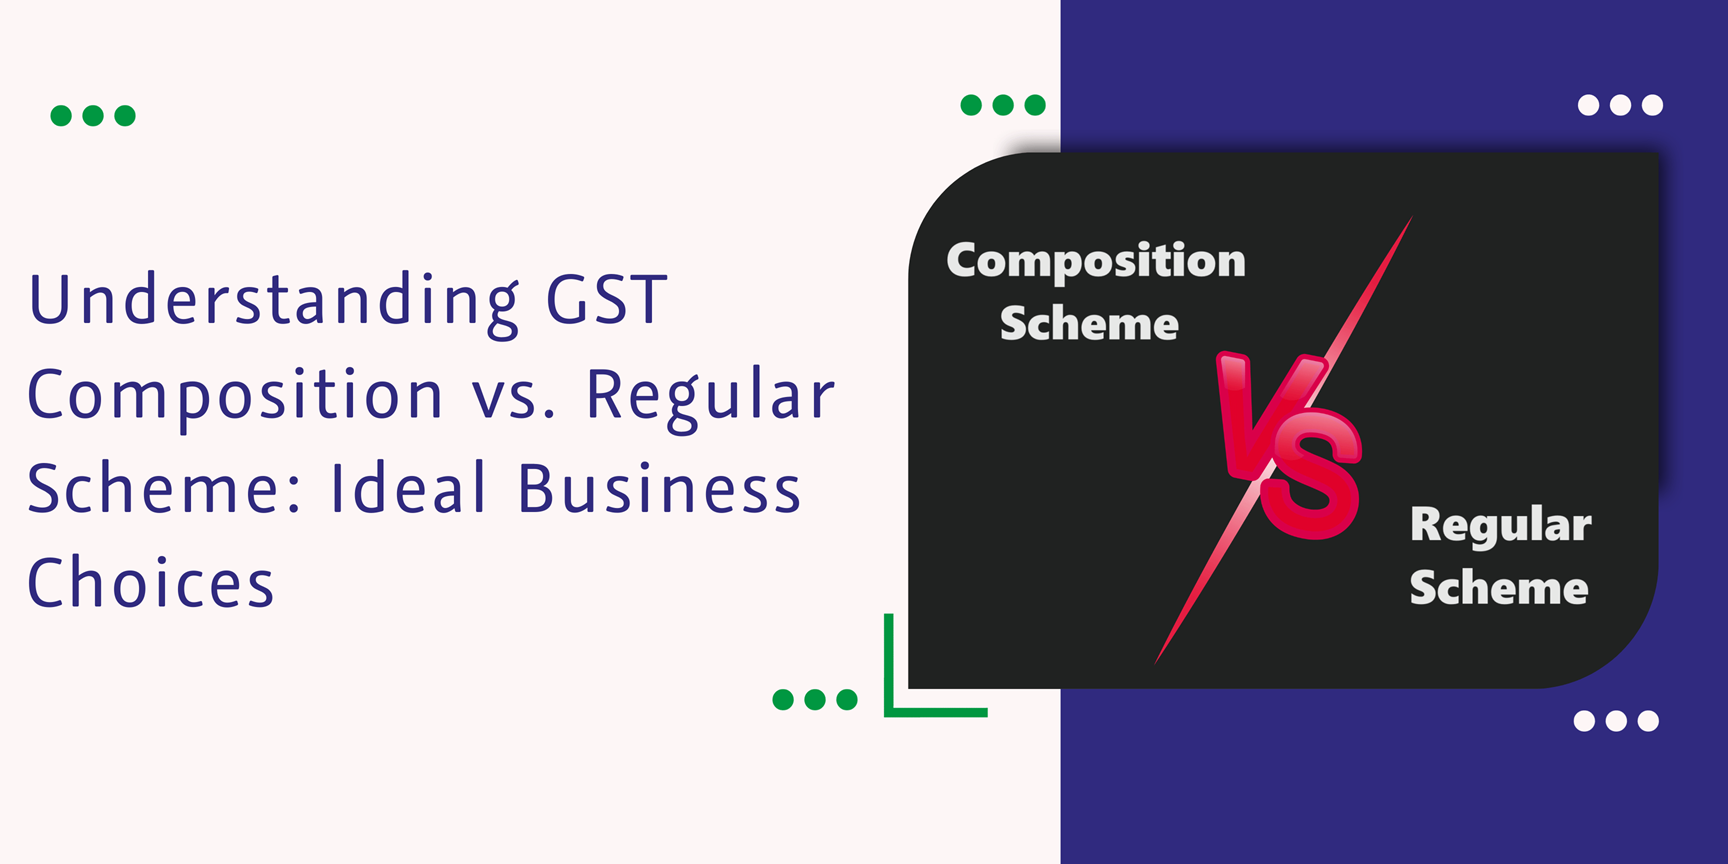 CaptainBiz: Understanding GST Composition vs. Regular Scheme: Ideal Business Choices